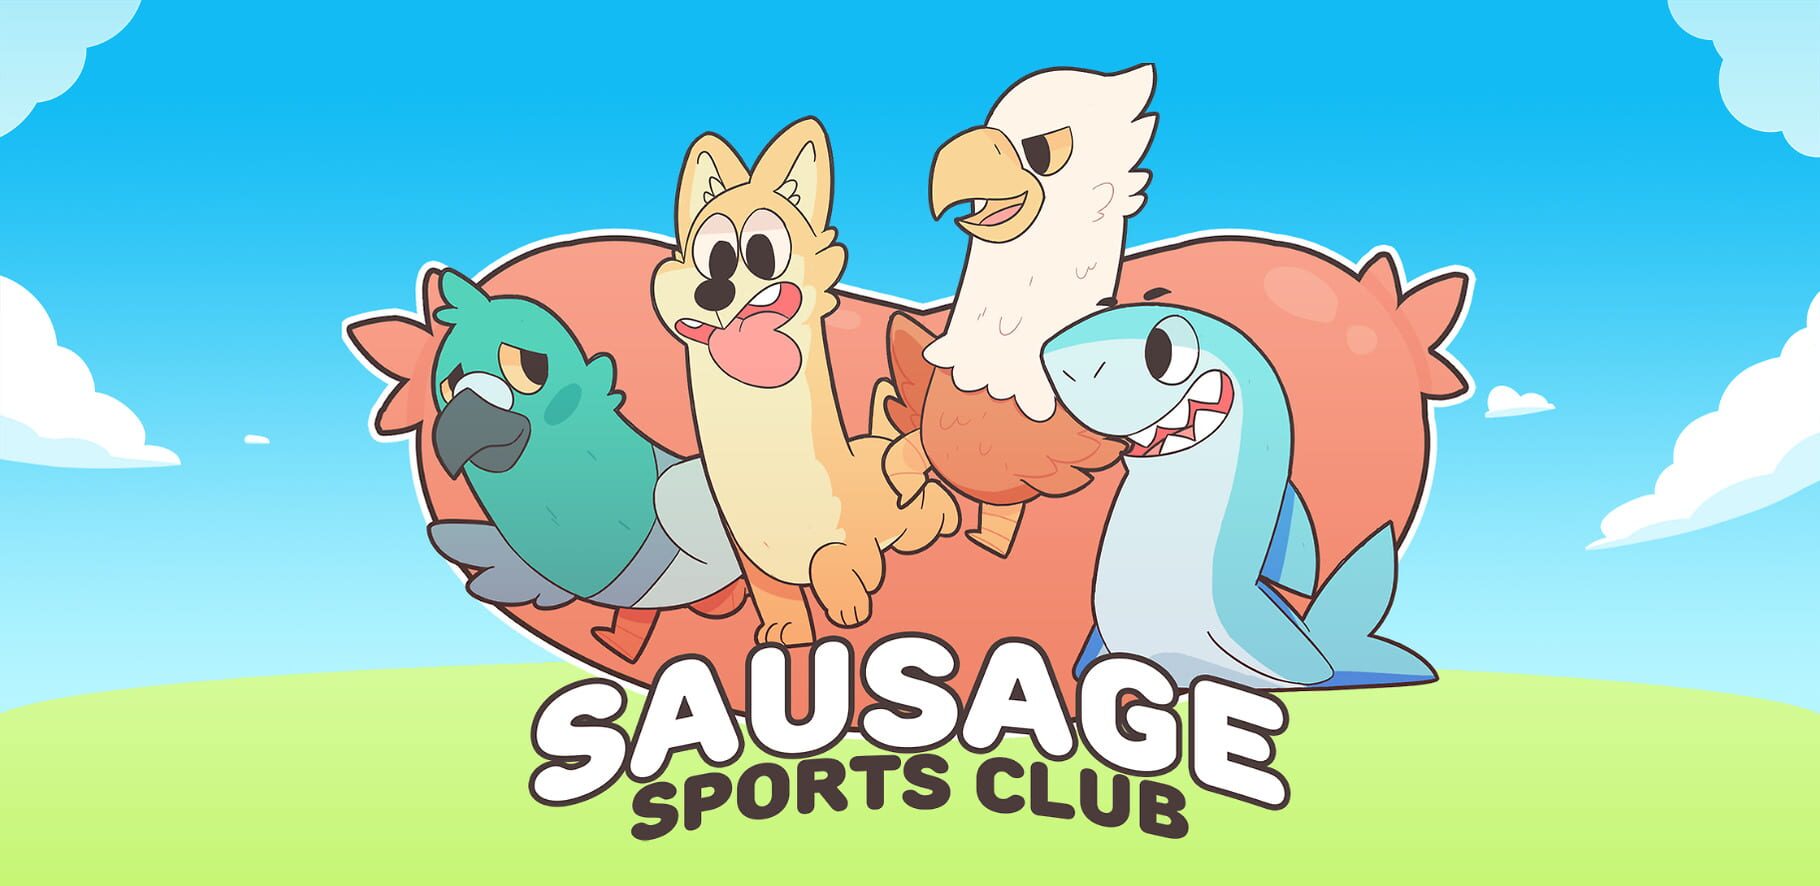 Sausage Sports Club artwork